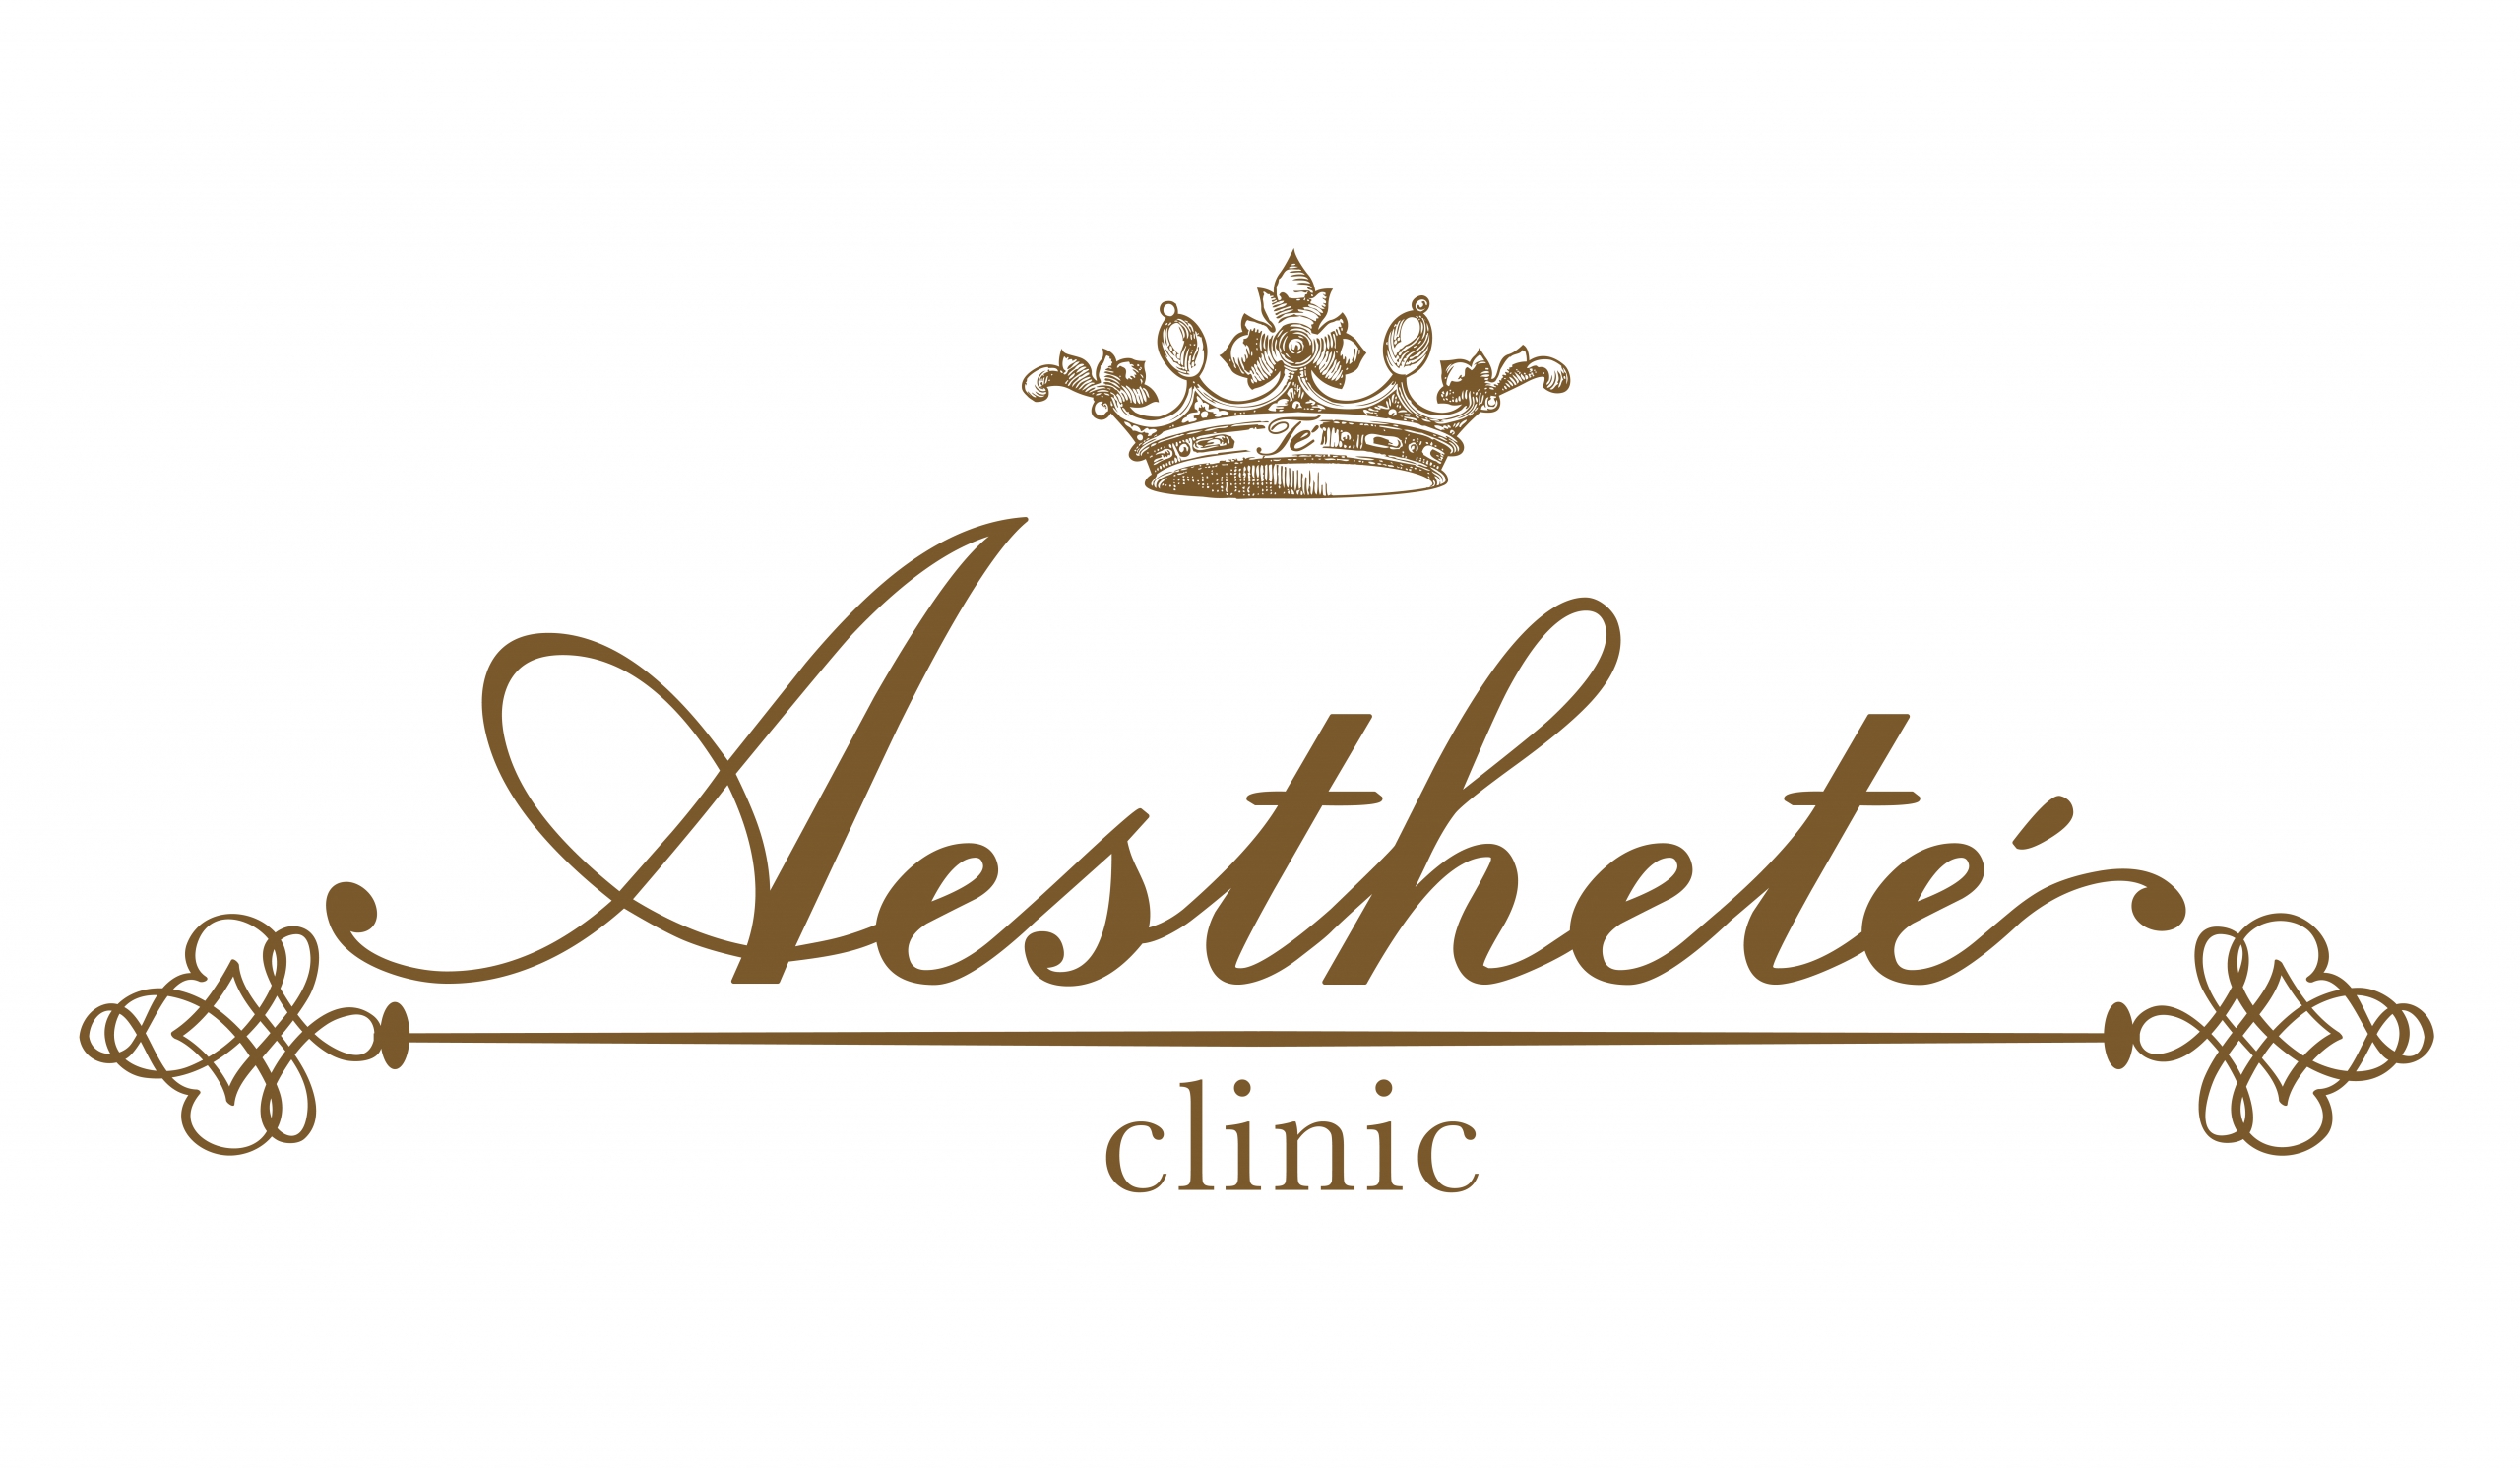 Aesthete’ Clinic